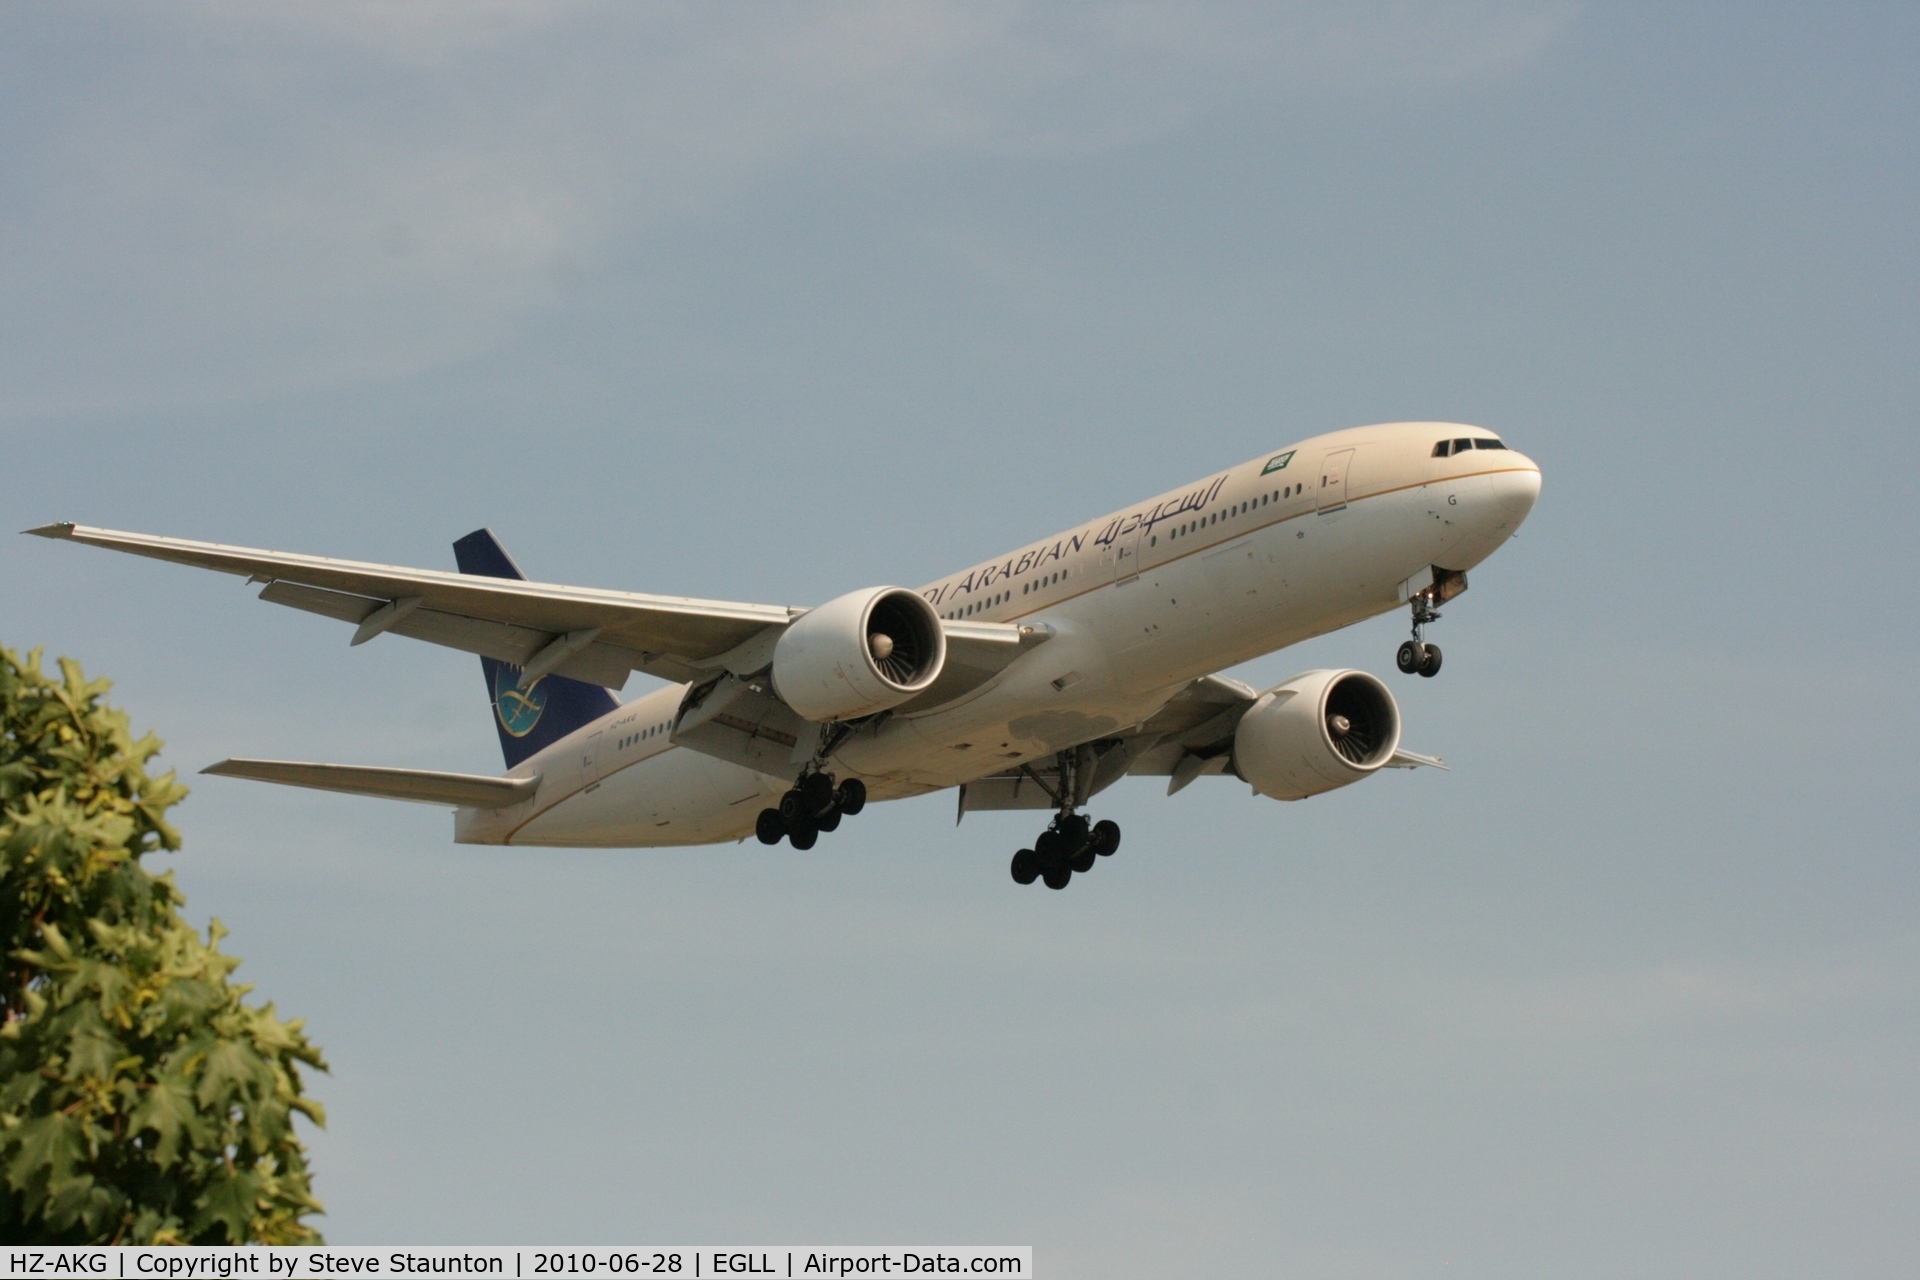 HZ-AKG, 1998 Boeing 777-268/ER C/N 28350, Taken at Heathrow Airport, June 2010